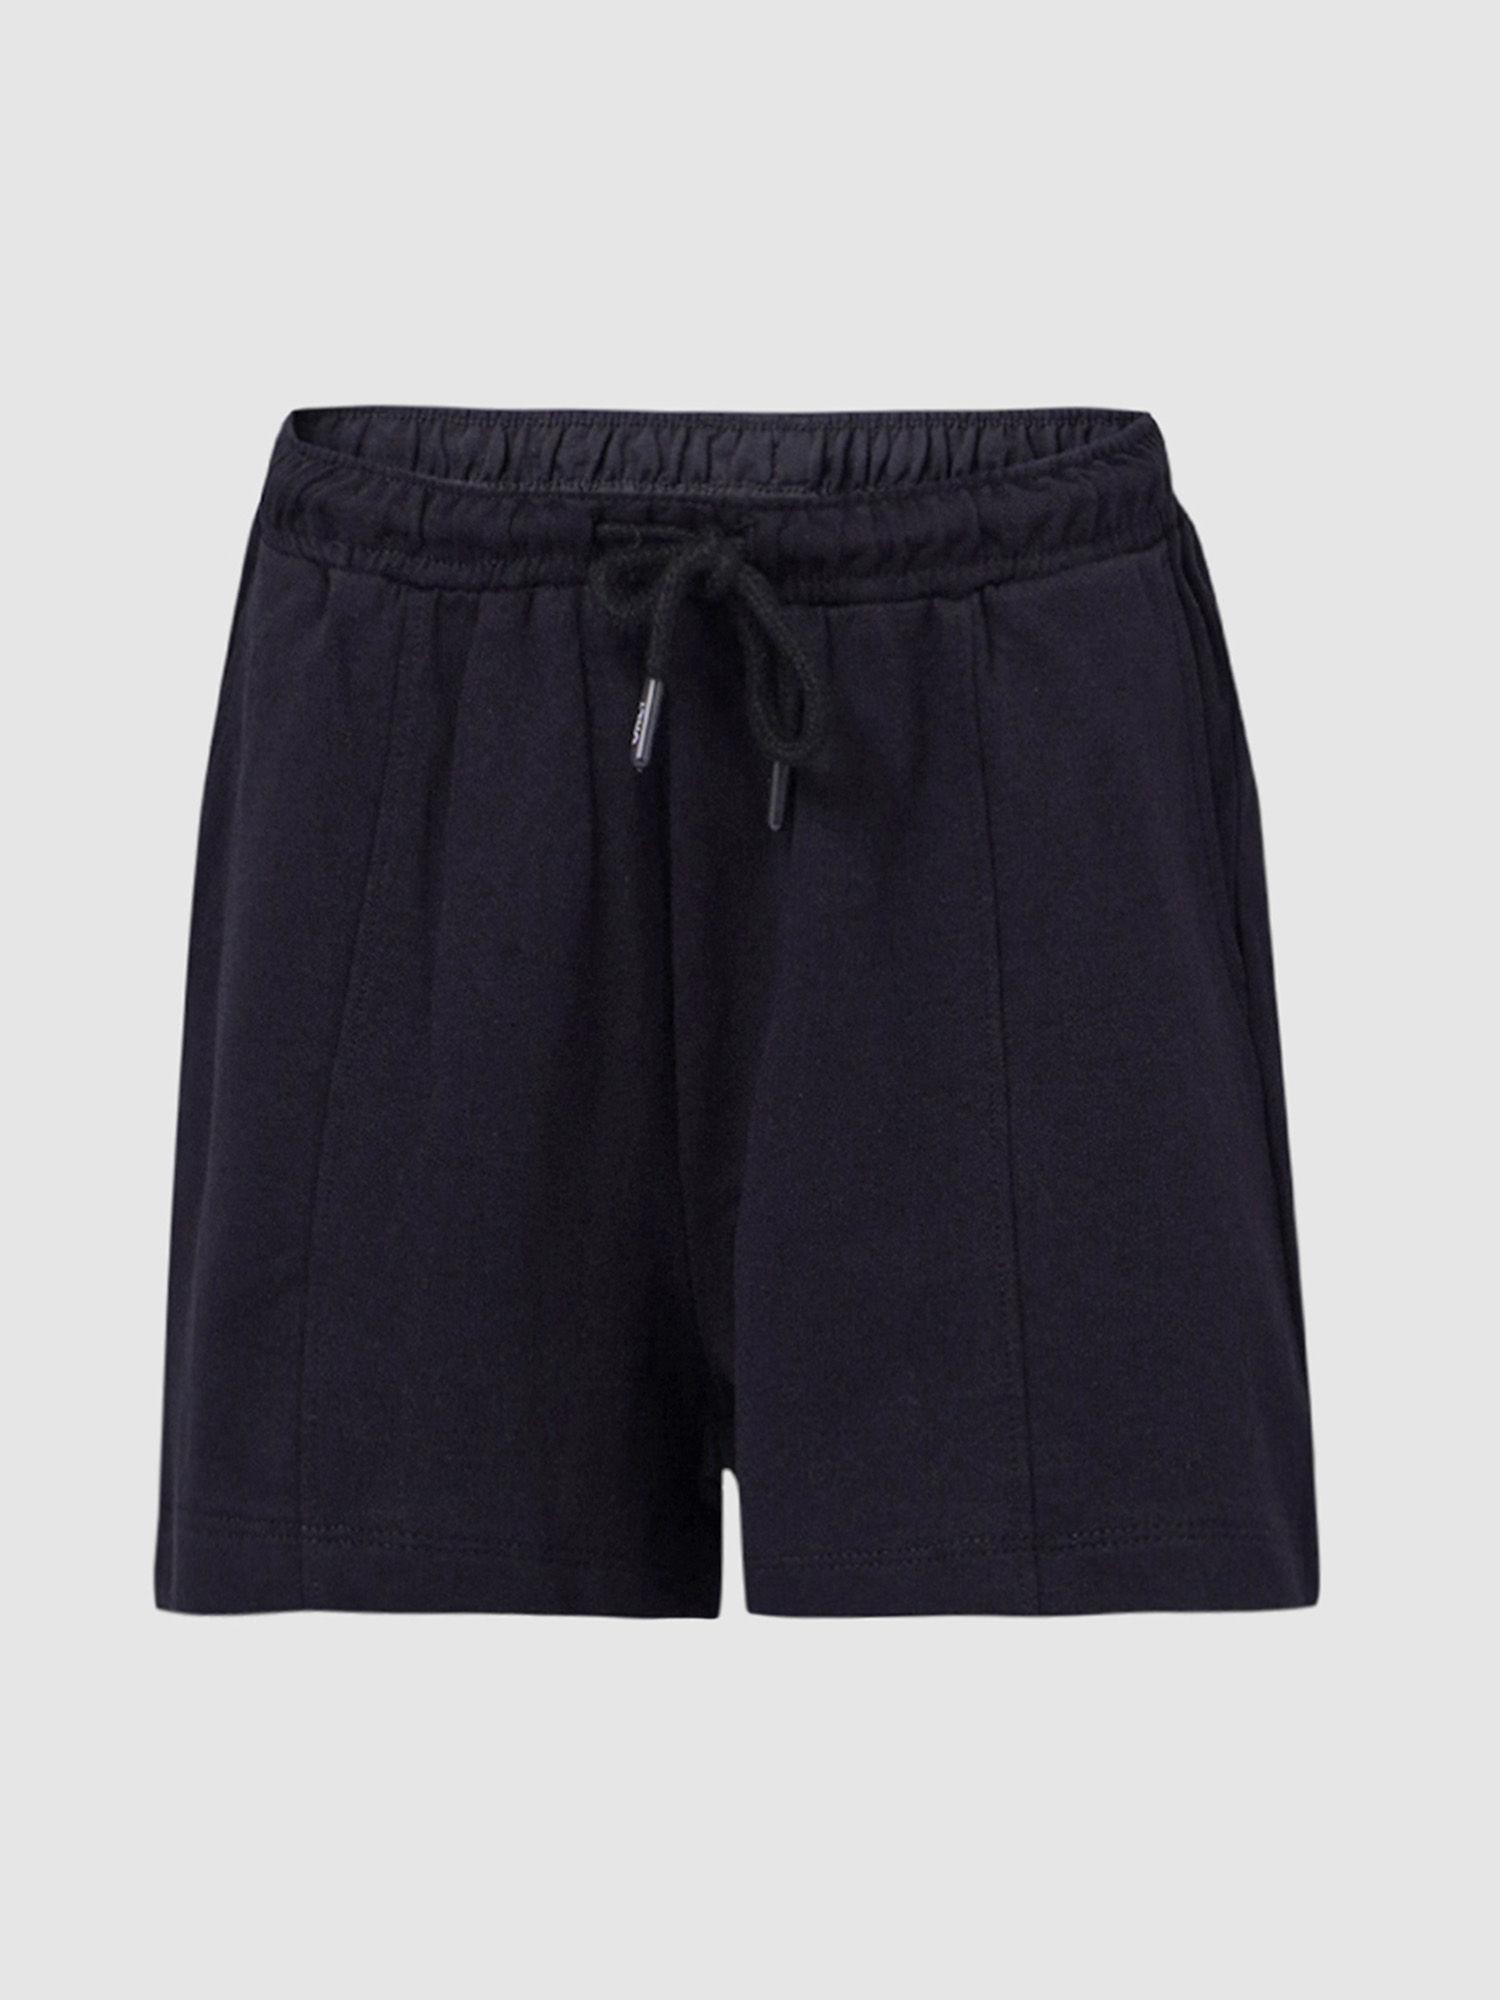 black-konkitty-shorts-jrs